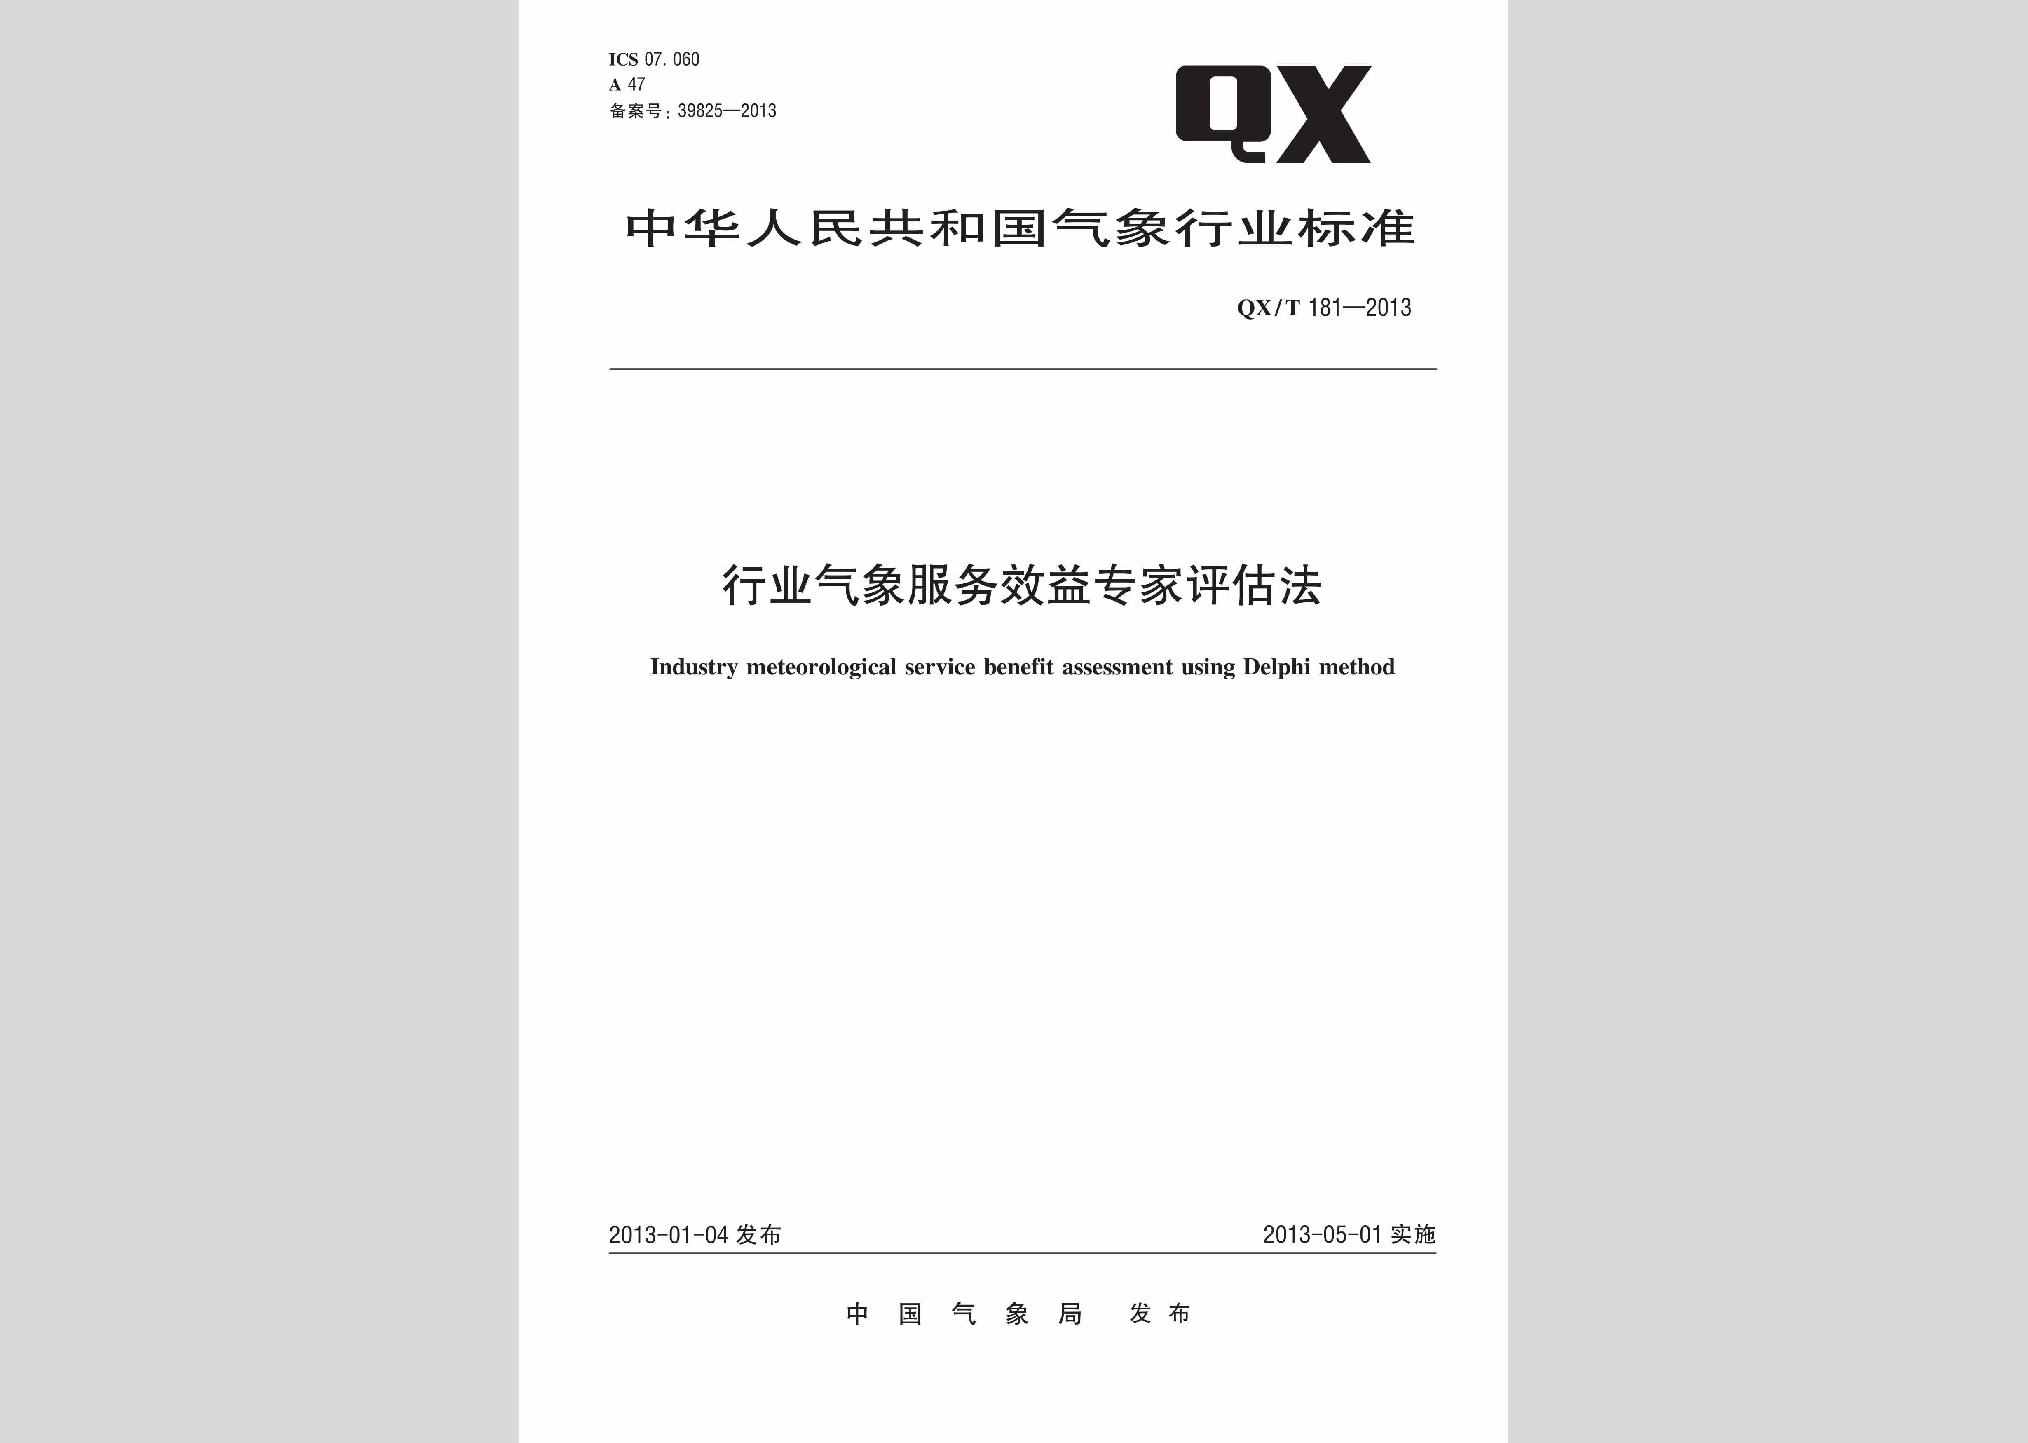 QX/T181-2013：行业气象服务效益专家评估法